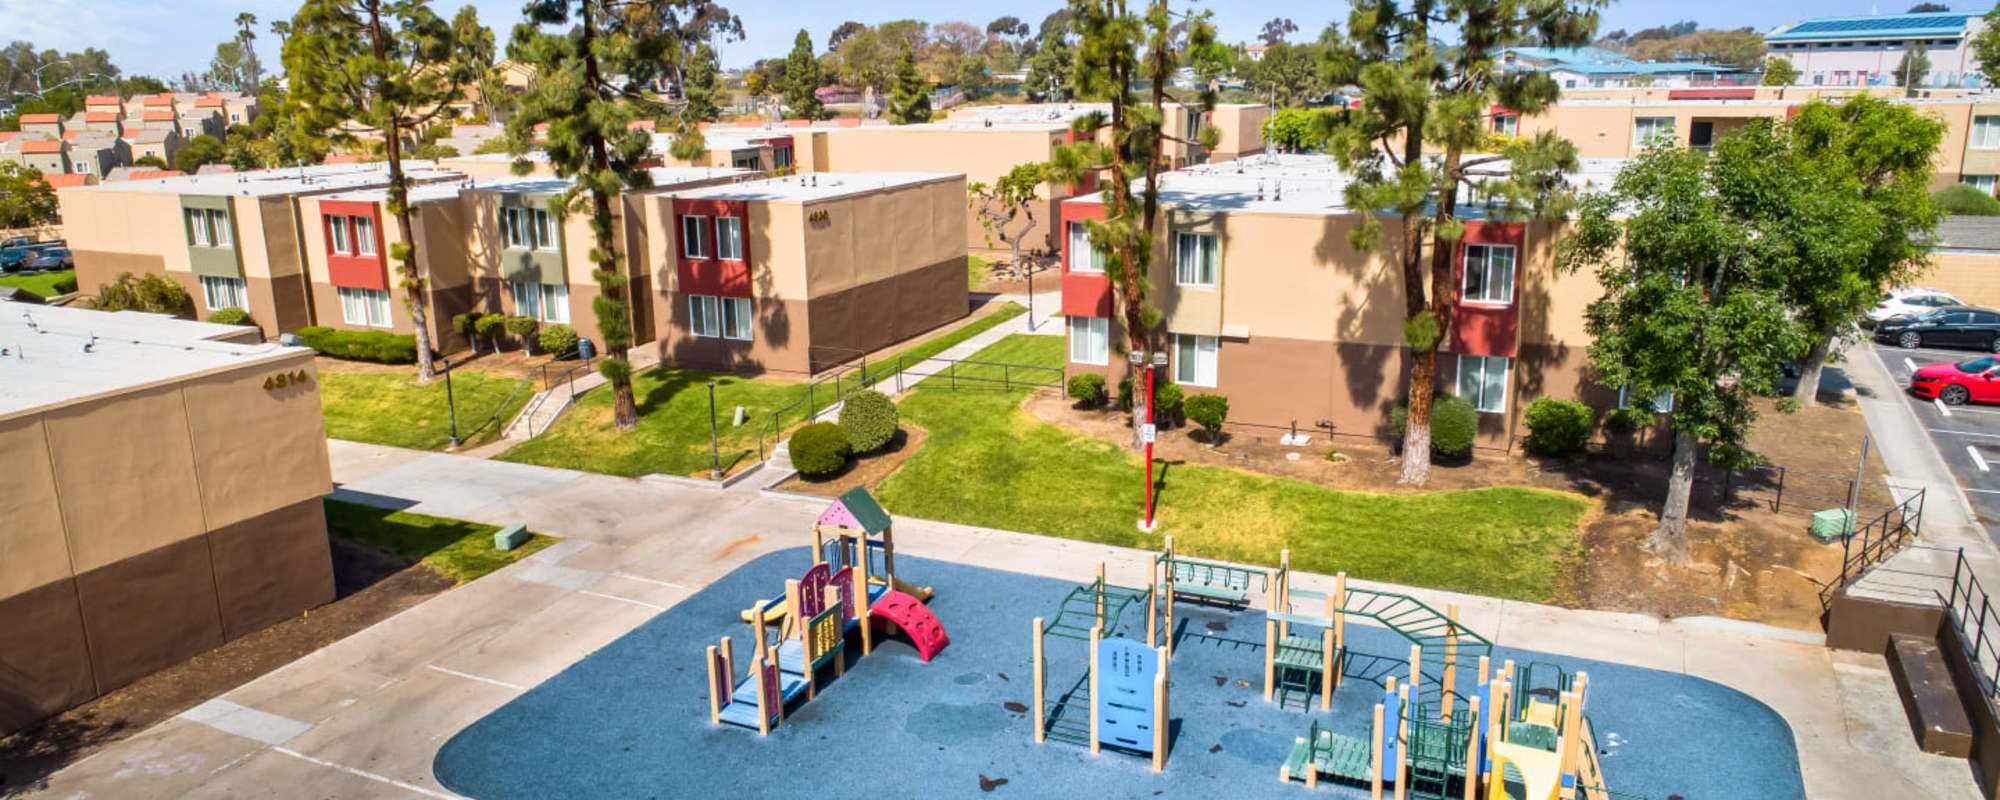 Community playground of Sea Breeze Gardens in San Diego, California